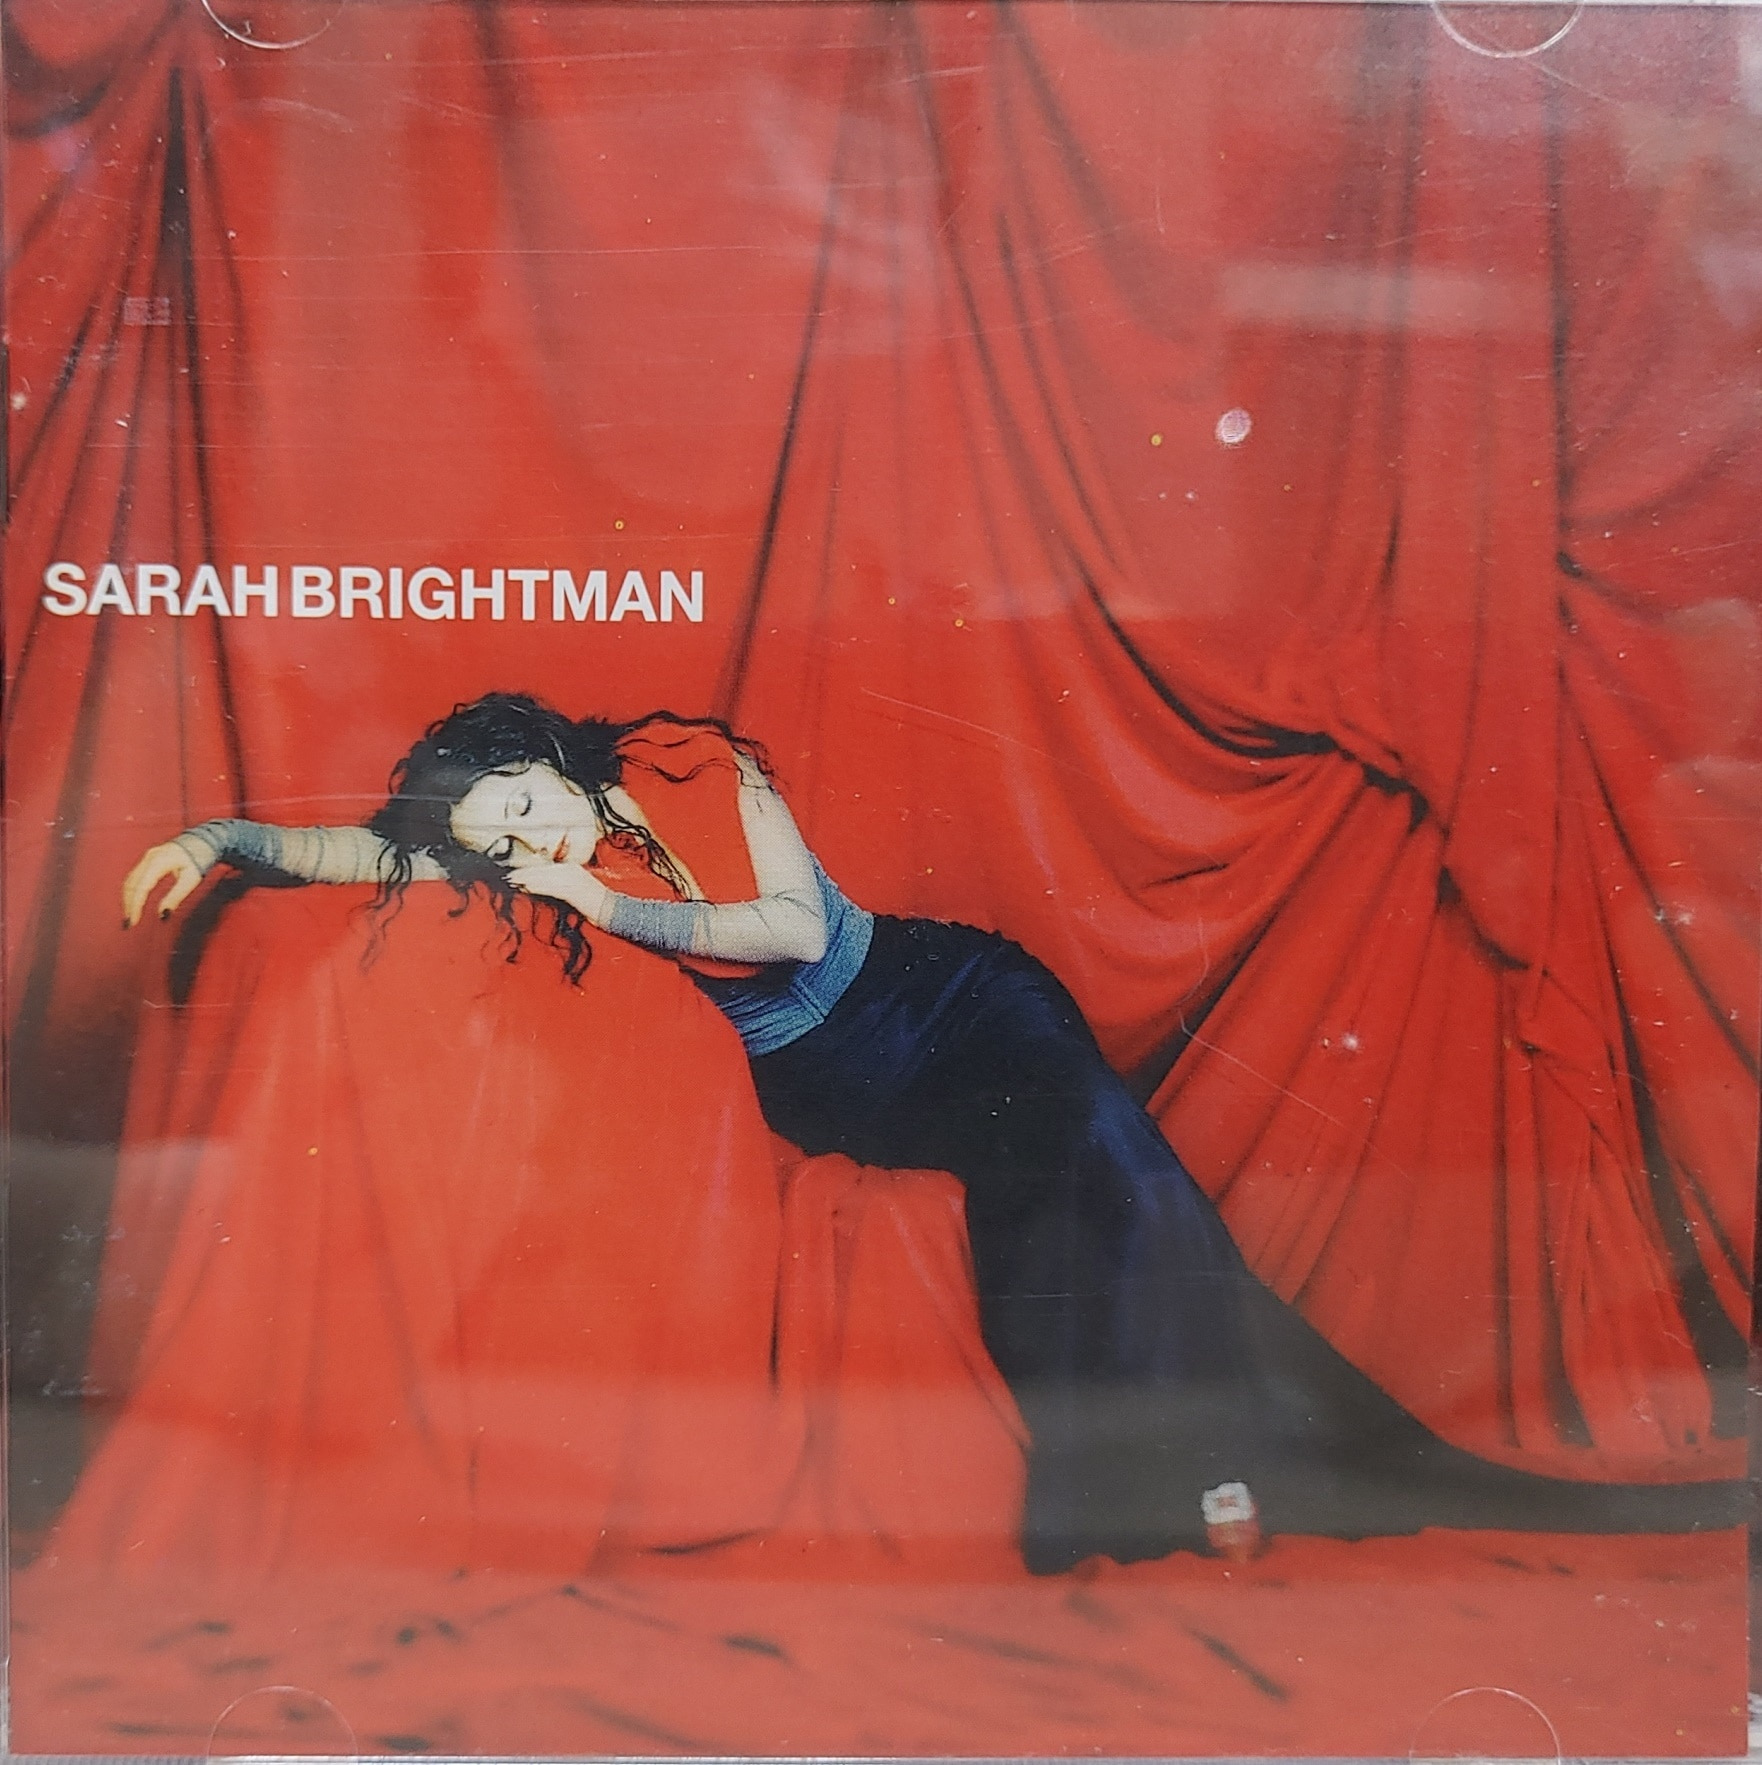 Sarah Brightman